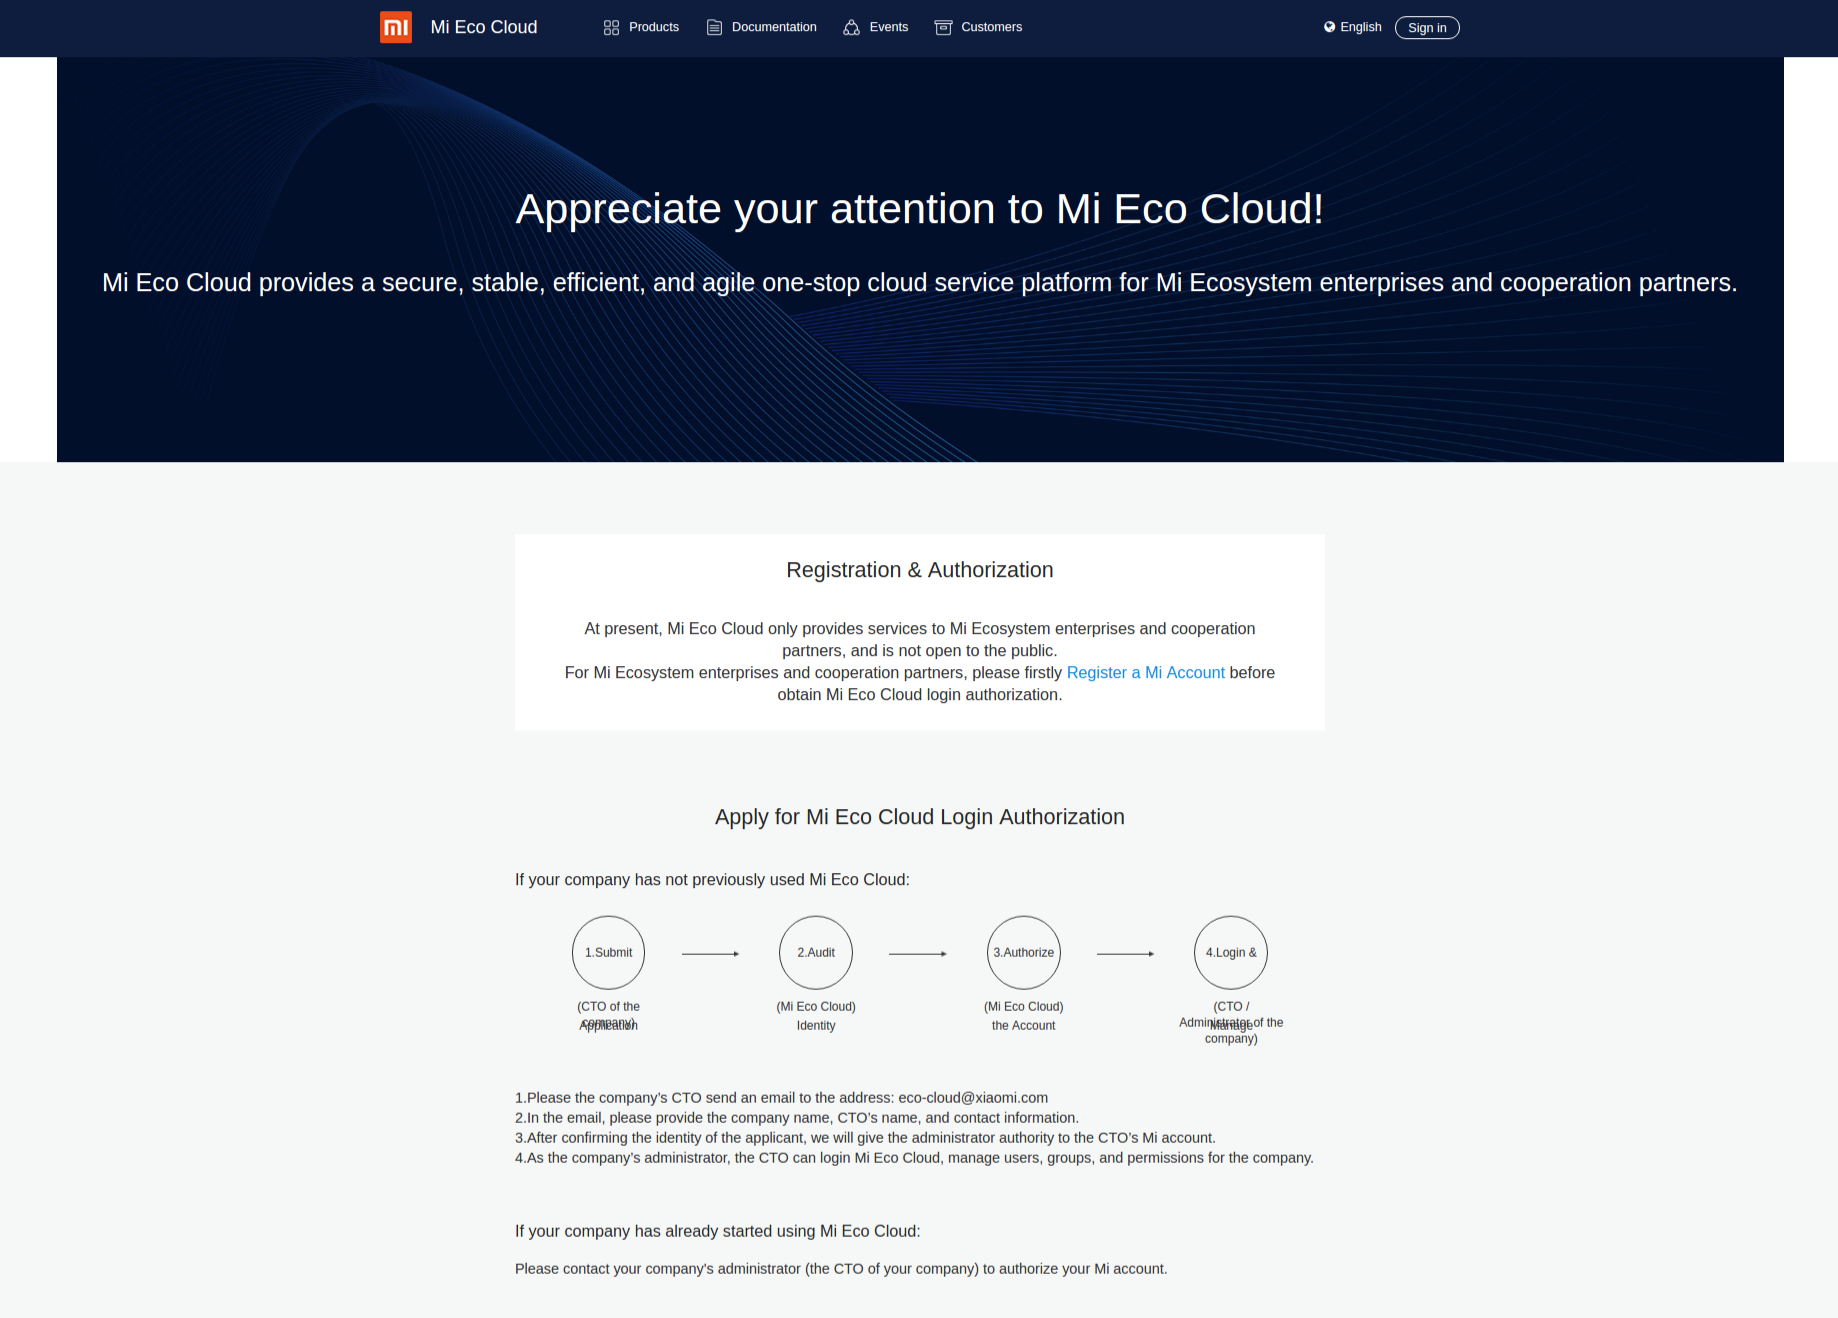 Registation & Authorization on Mi Eco Cloud Platform